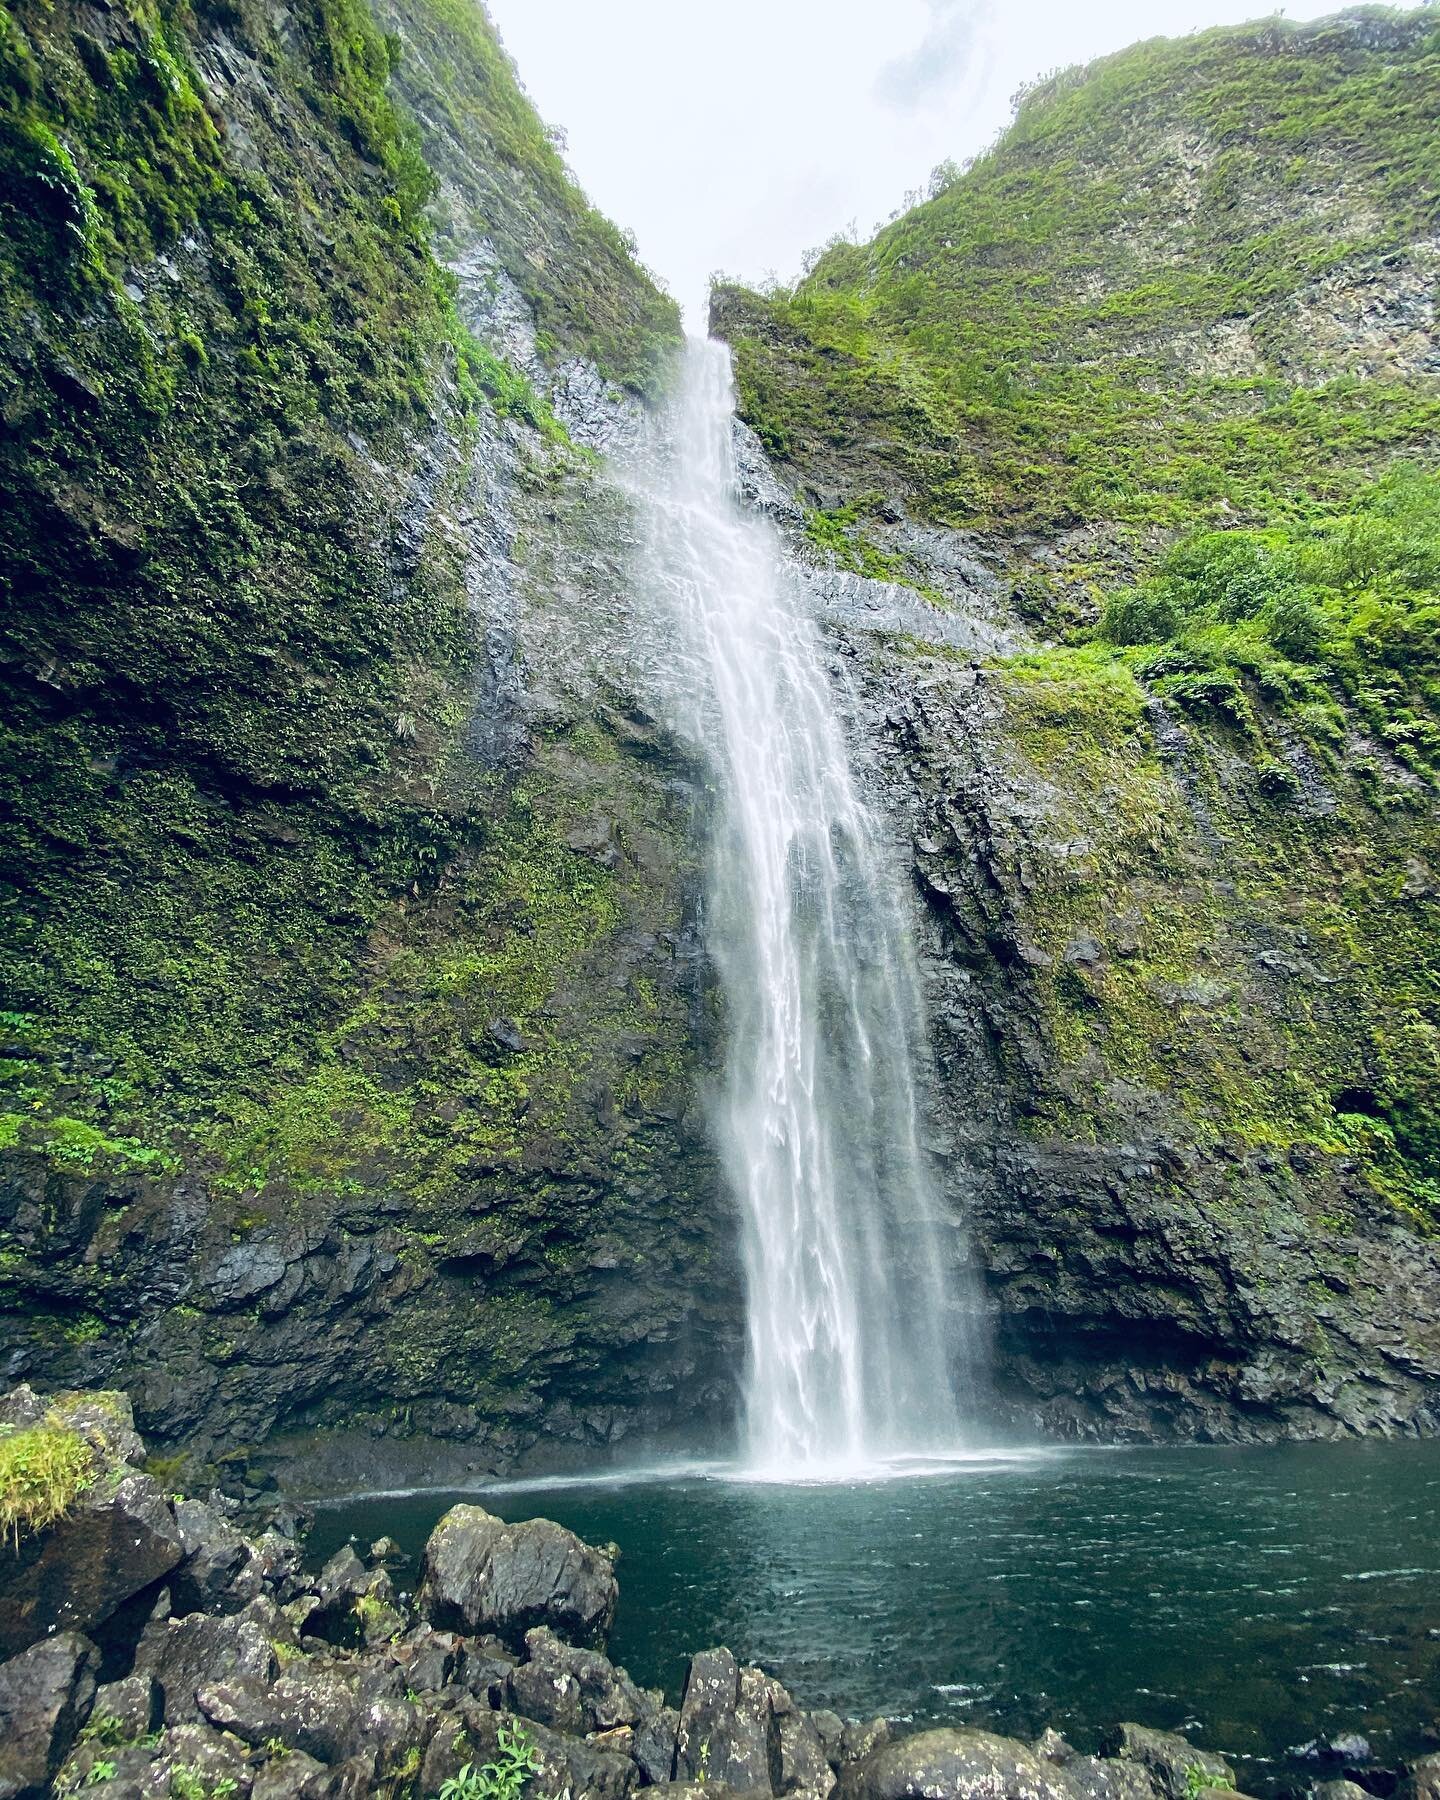 Hanakapiai Falls #kauai #hawaii #hike #hiking #adventure #waterfall #hanakapiaifalls #shotoniphone #nature #outdoor #kalalautrail #travel #vacation #explore #brothers #hikingadventures #earth #napalicoast #trail